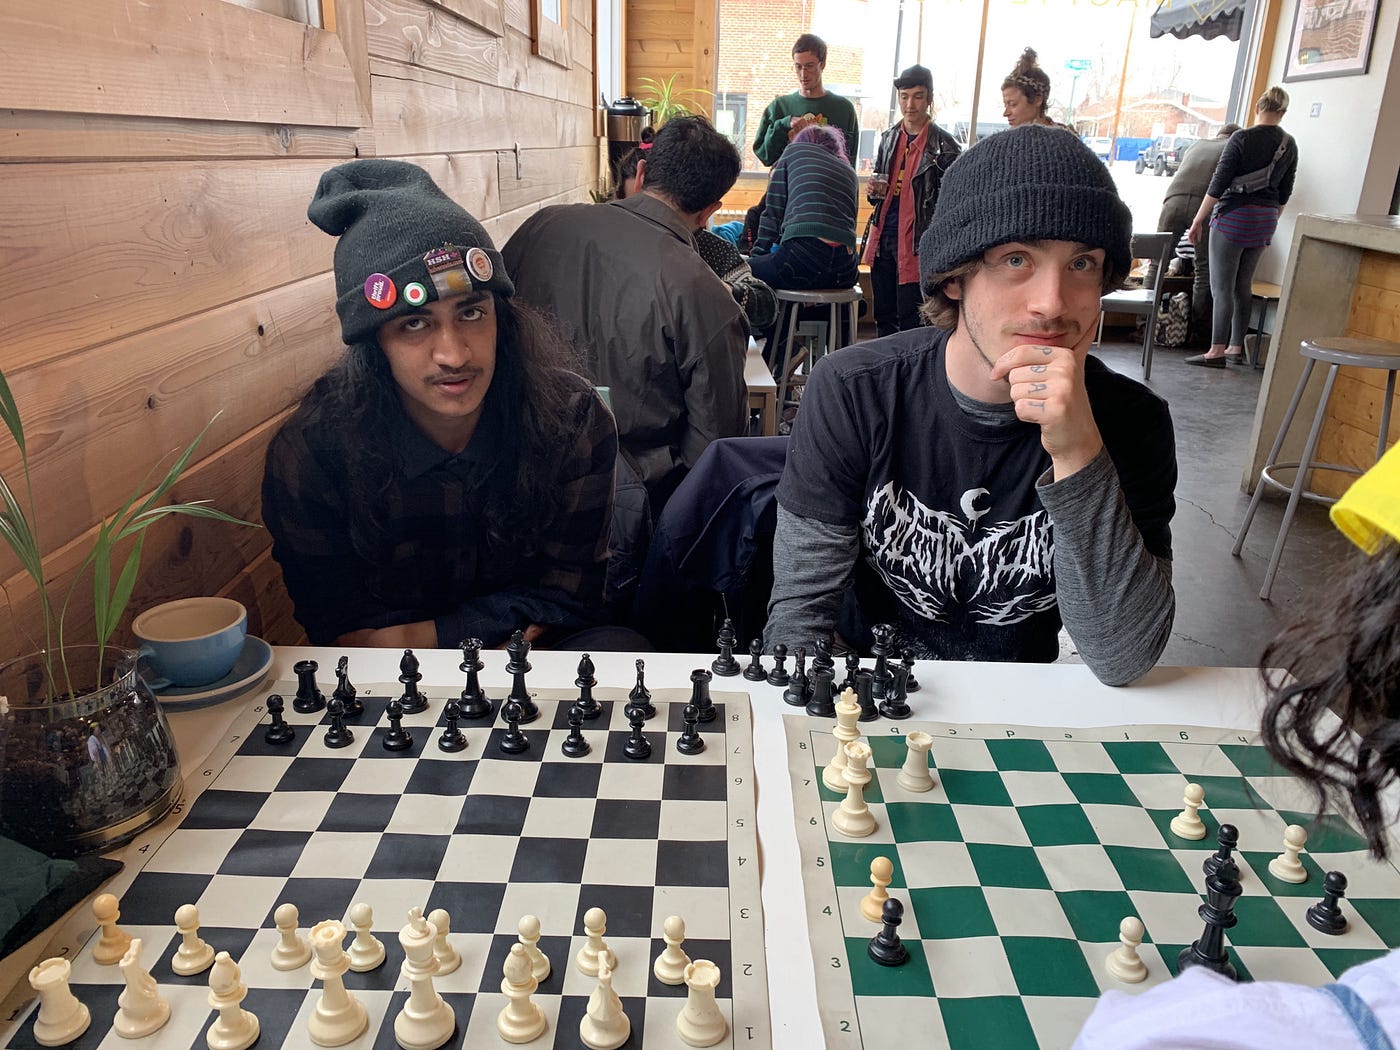 Casual Chess Club – A Las Vegas, Nevada Chess Club